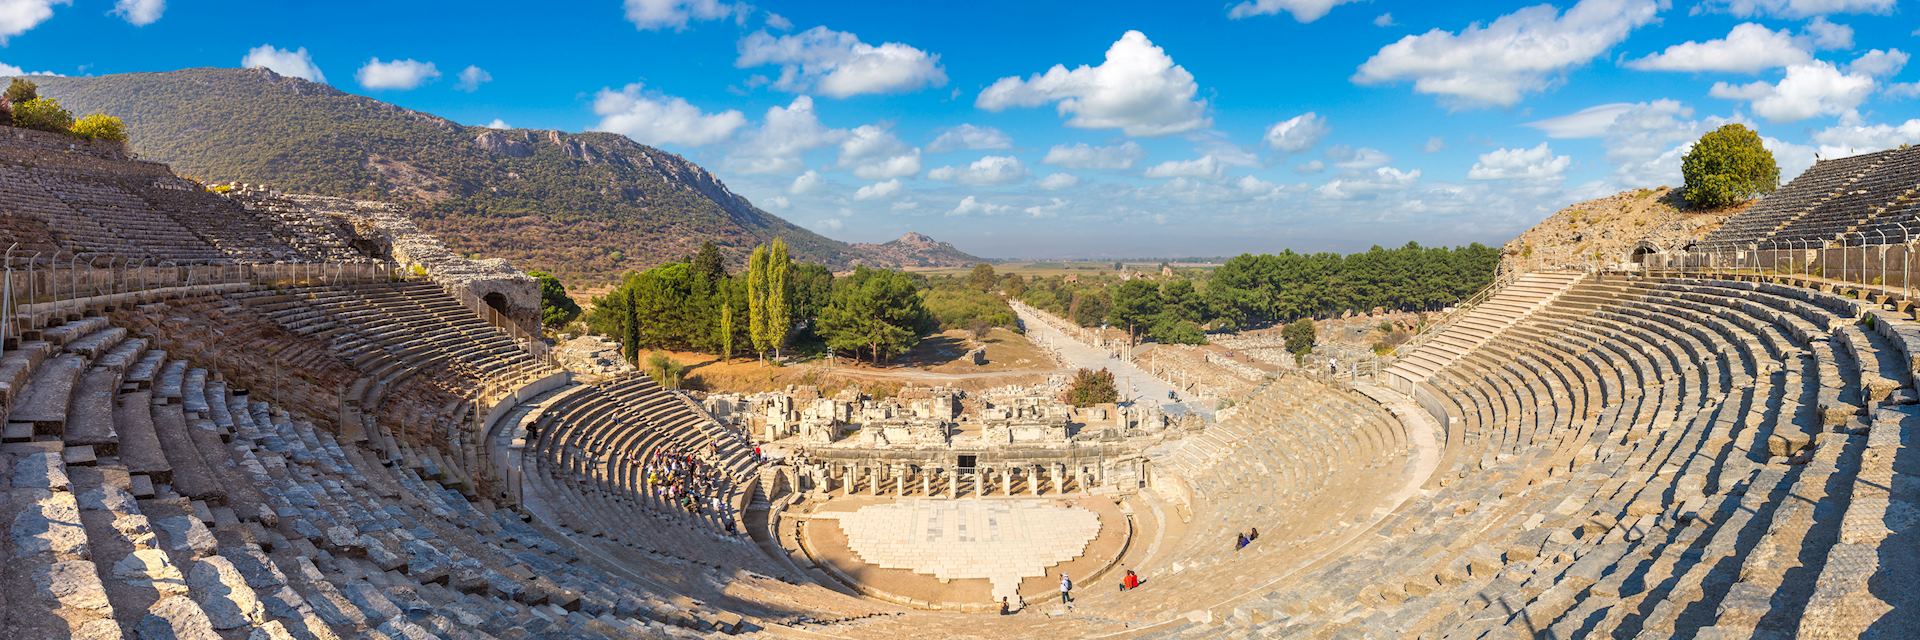 Ancient amphitheater in Ephesus